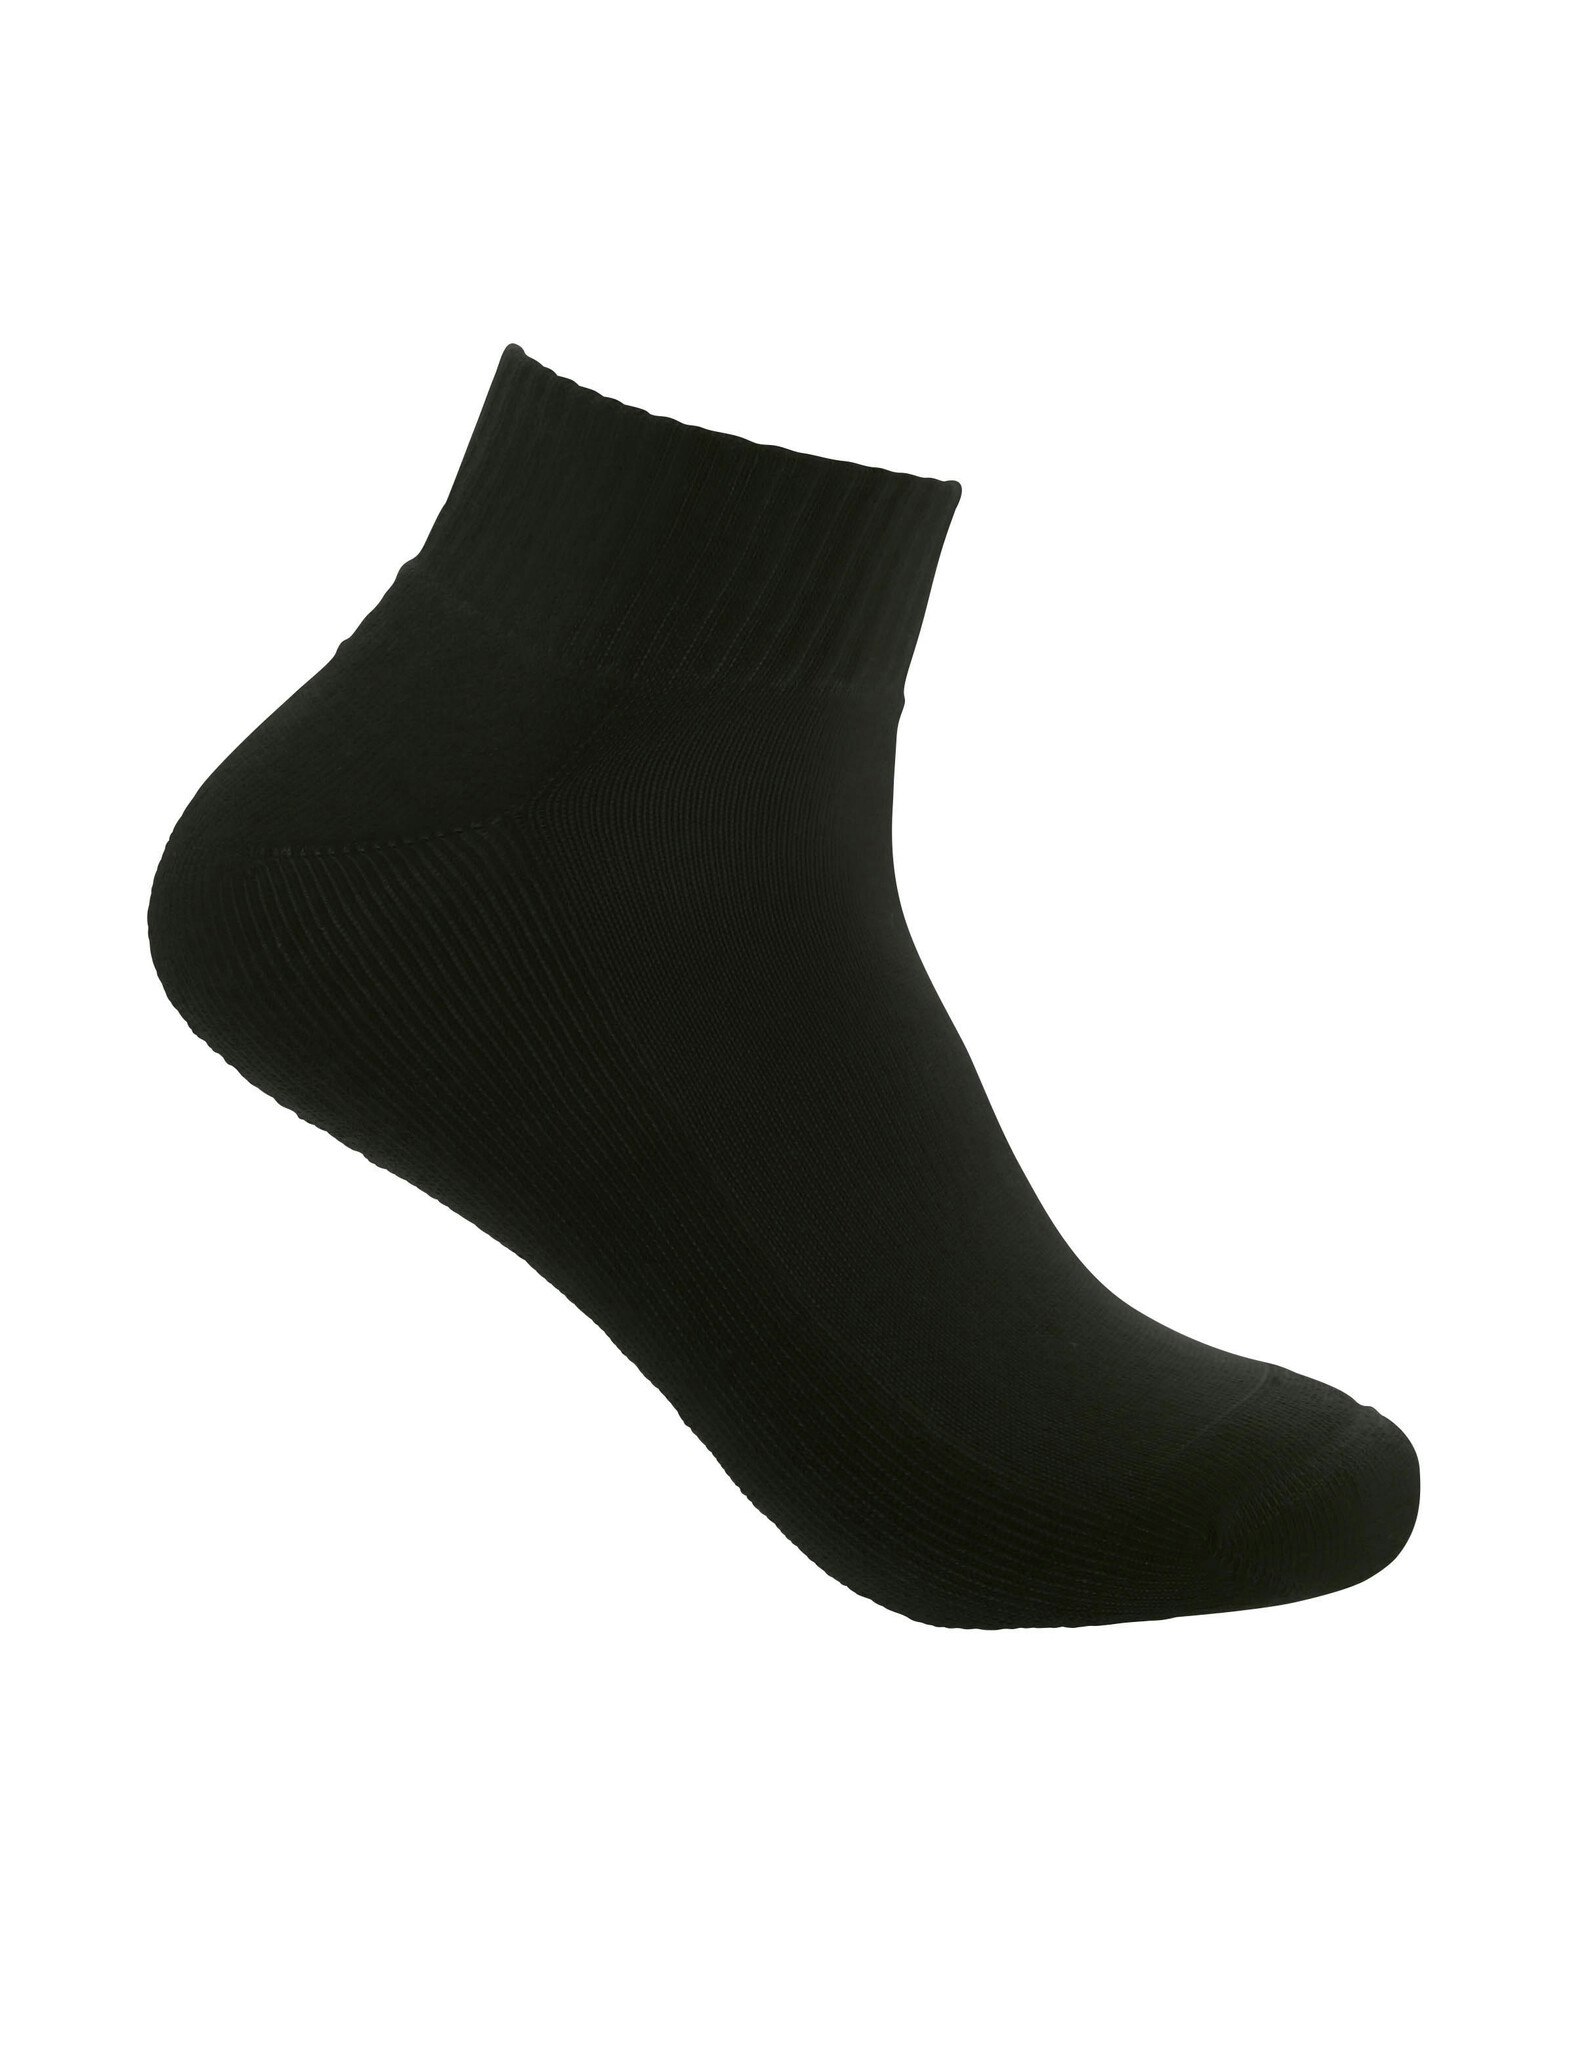 Sports socks cotton black 2-pack